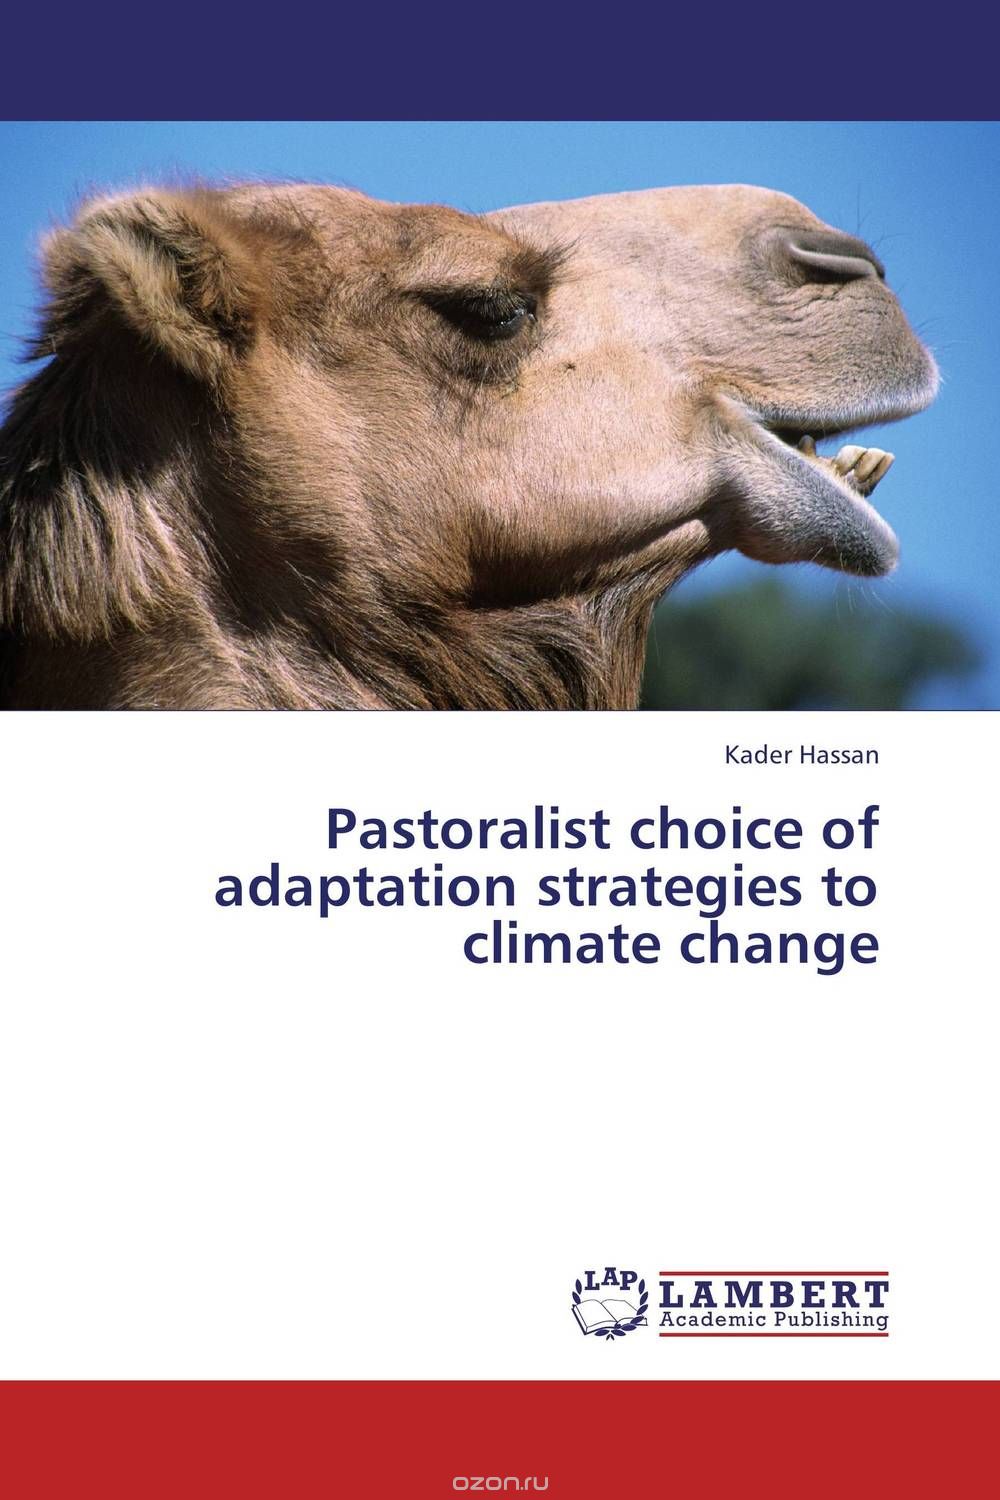 Скачать книгу "Pastoralist choice of adaptation strategies to climate change"